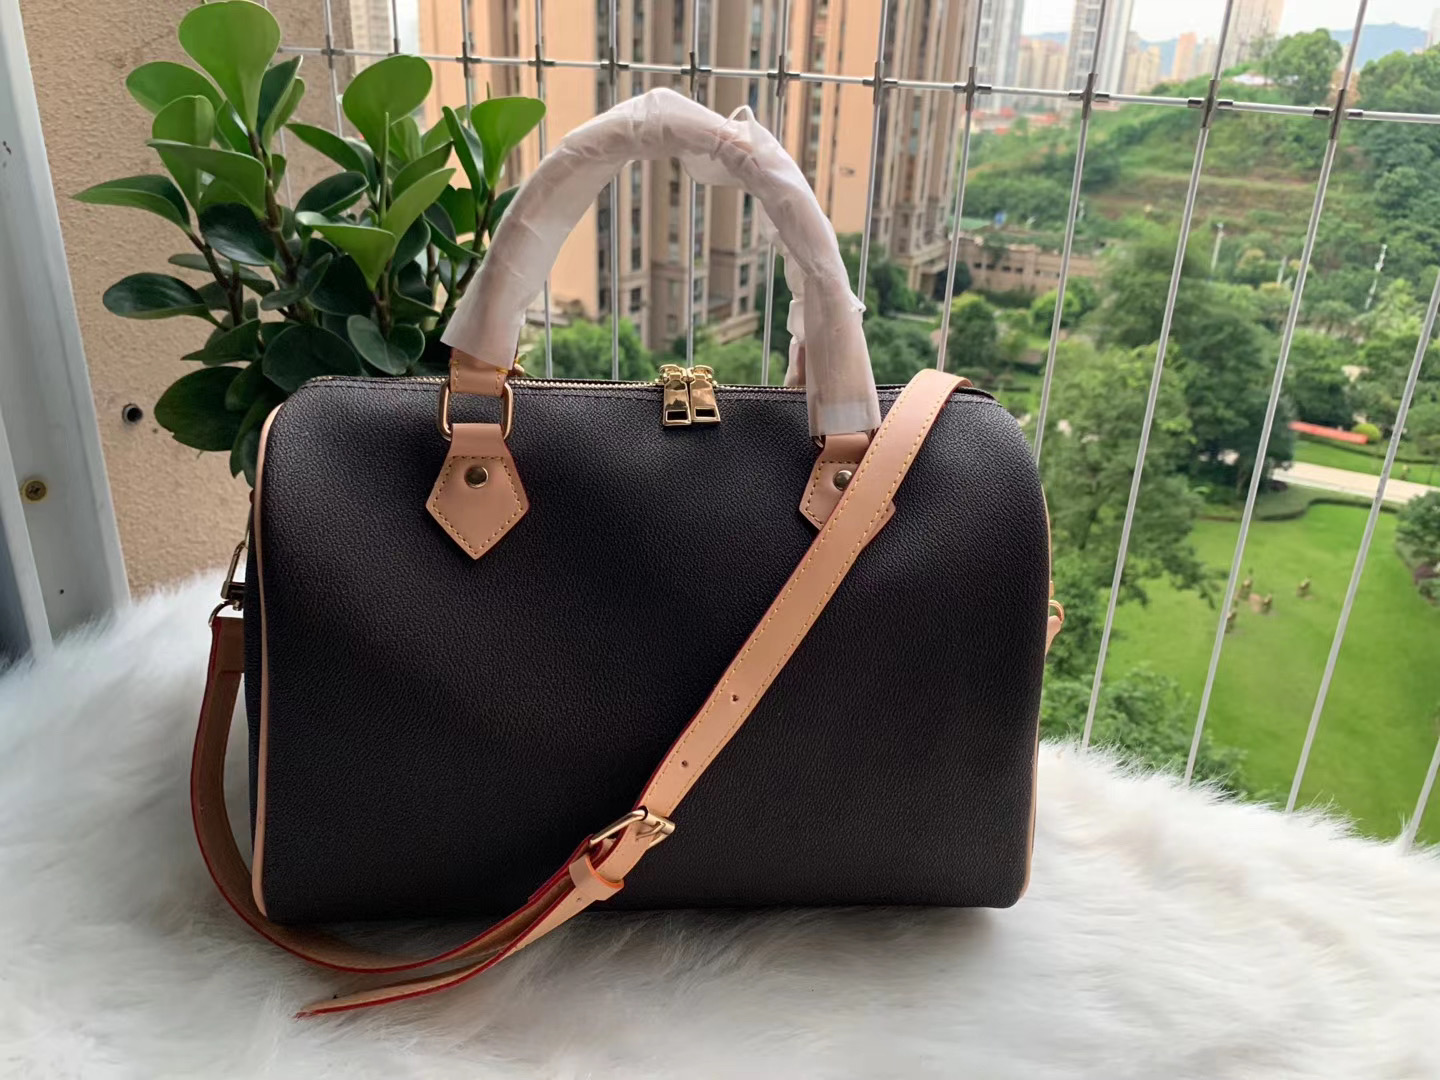 

Designers Bags 2021 Women Travel bag Handbags Handbag Classic Style Fashion Shoulder Lady Totes 30cm With key lock, Brown grid